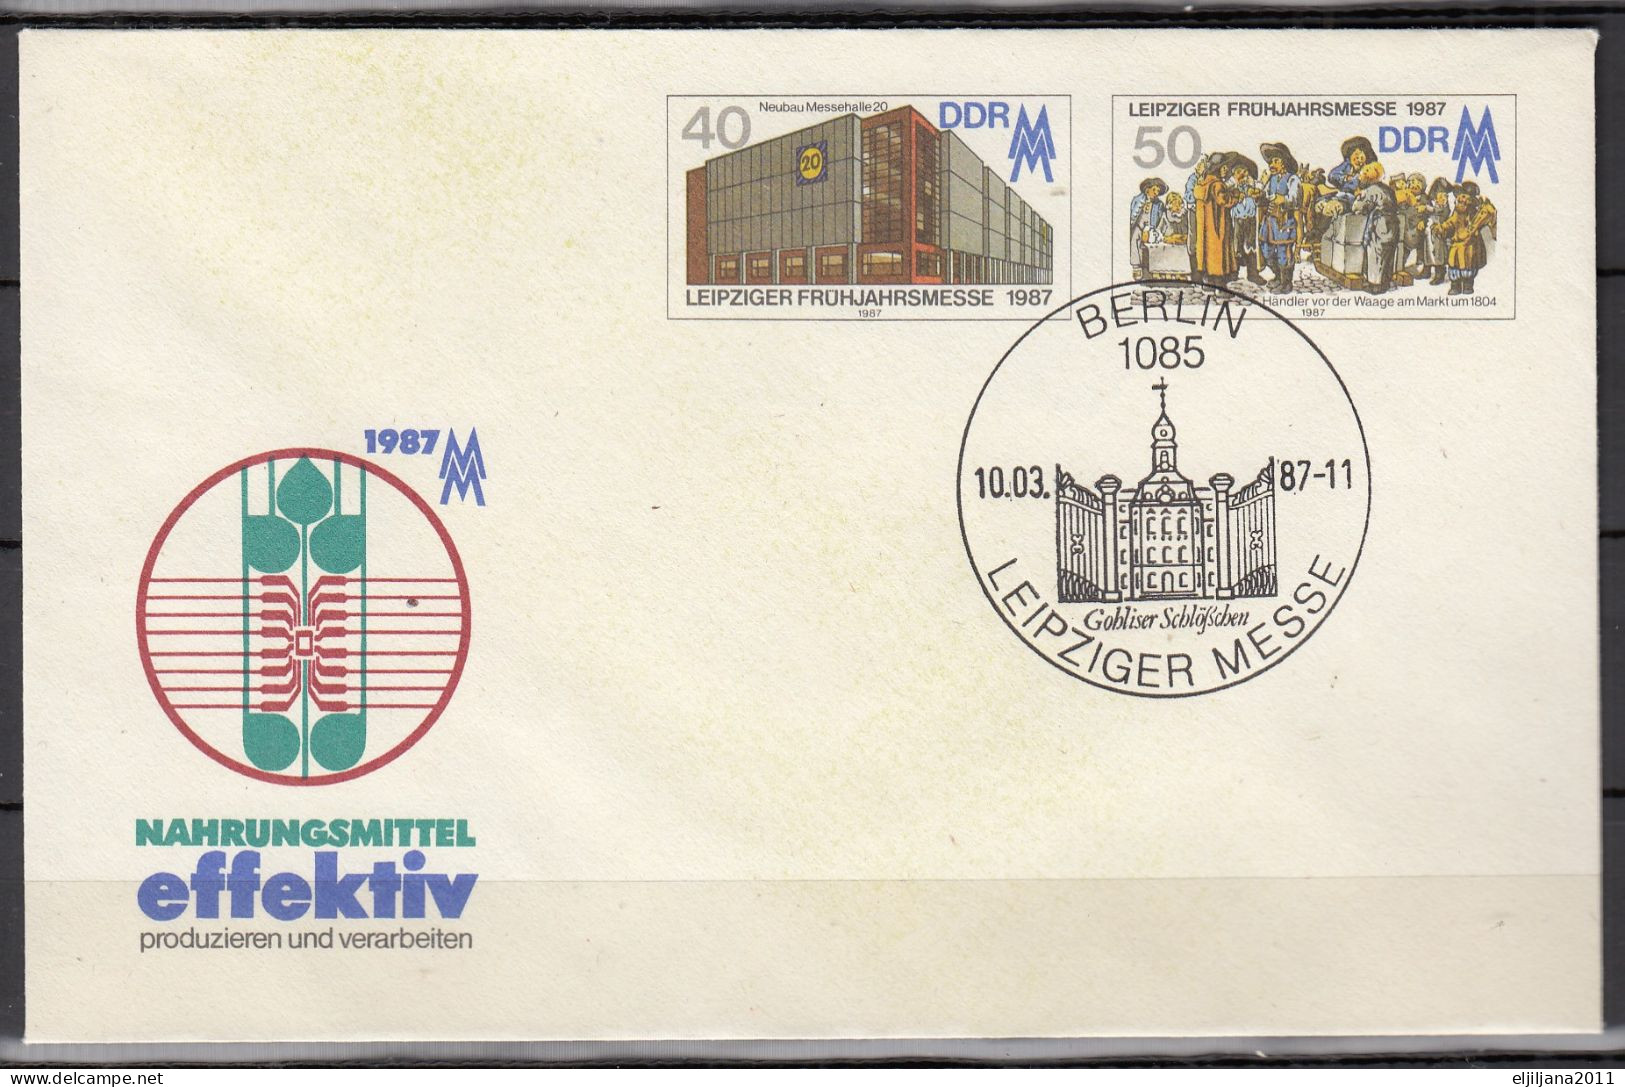 ⁕ Germany DDR 1987 ⁕ "effektiv" - Leipziger Frühjahrsmesse / Postal Stationery ⁕ 2v Unused Cover - Covers - Mint